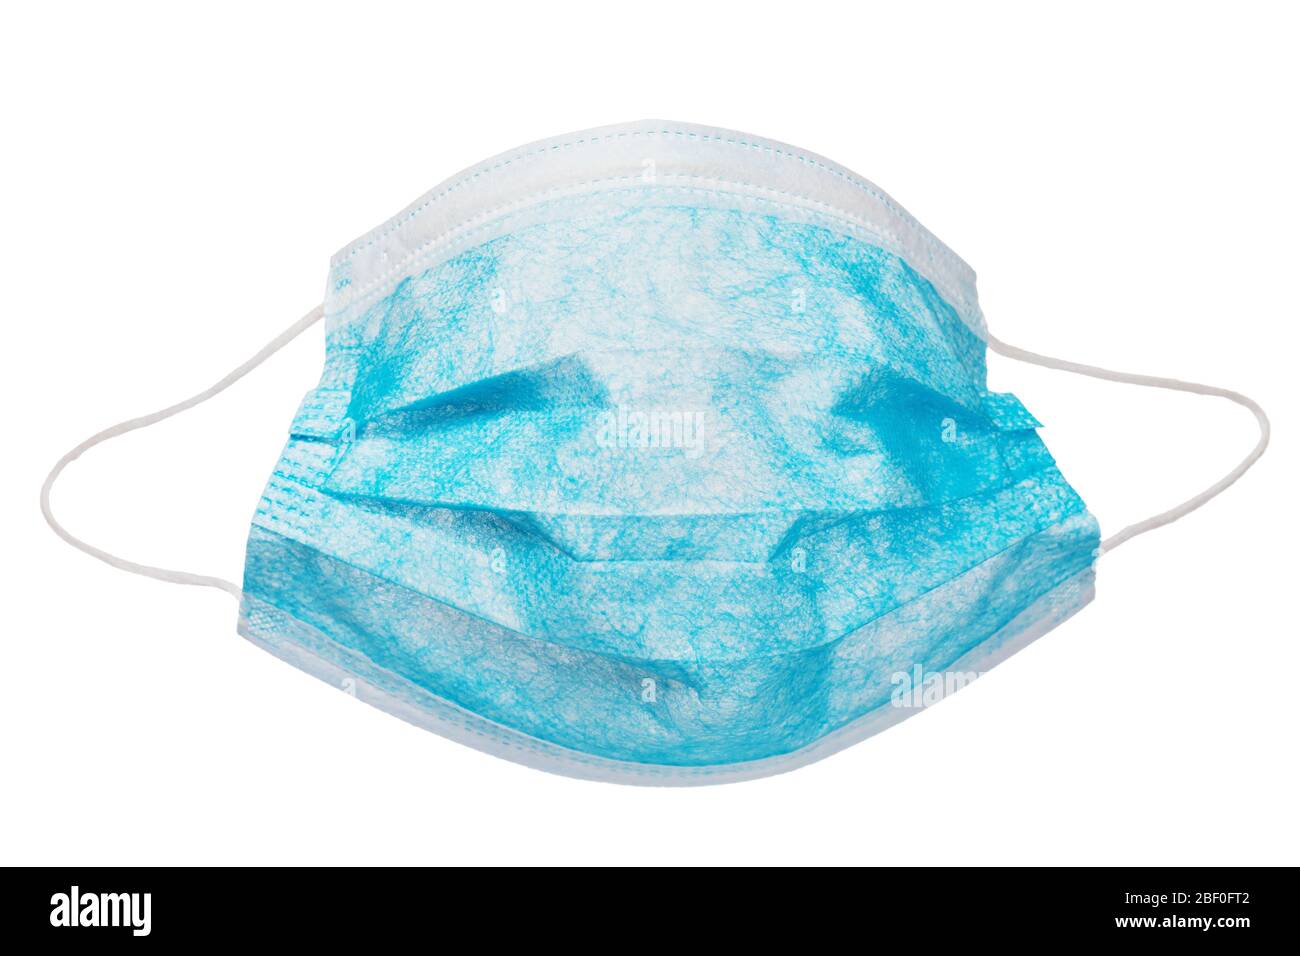 Blue medical mask isolated on white background. Protection against coronavirus and other respiratory viruses Stock Photo